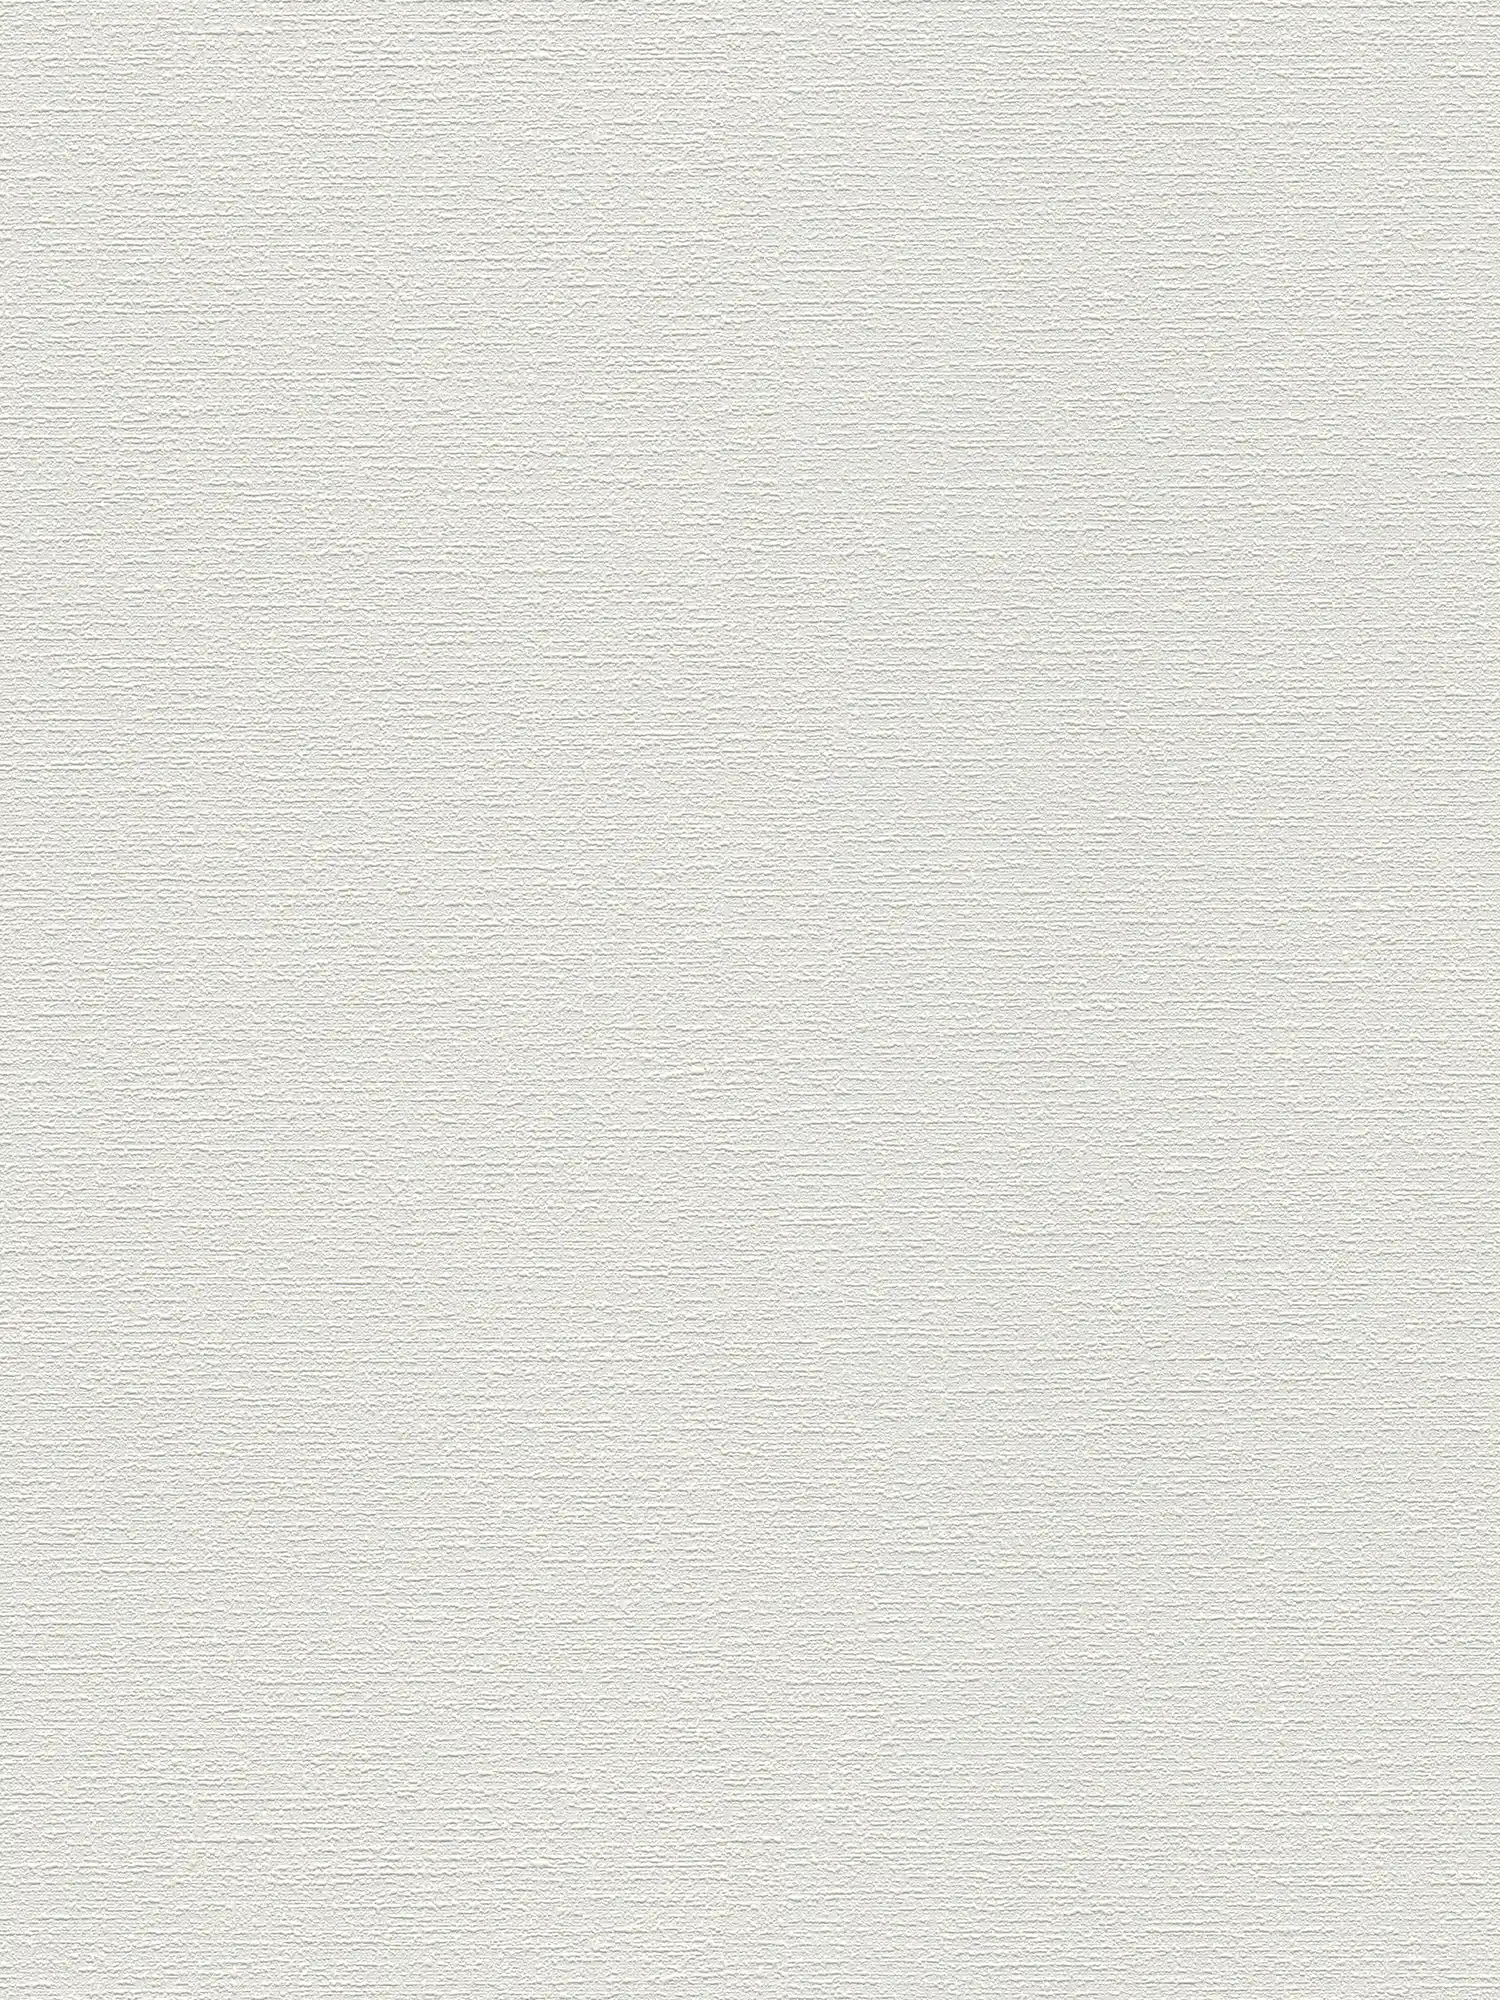 Carta da parati con struttura fine in gesso - verniciabile, bianca
